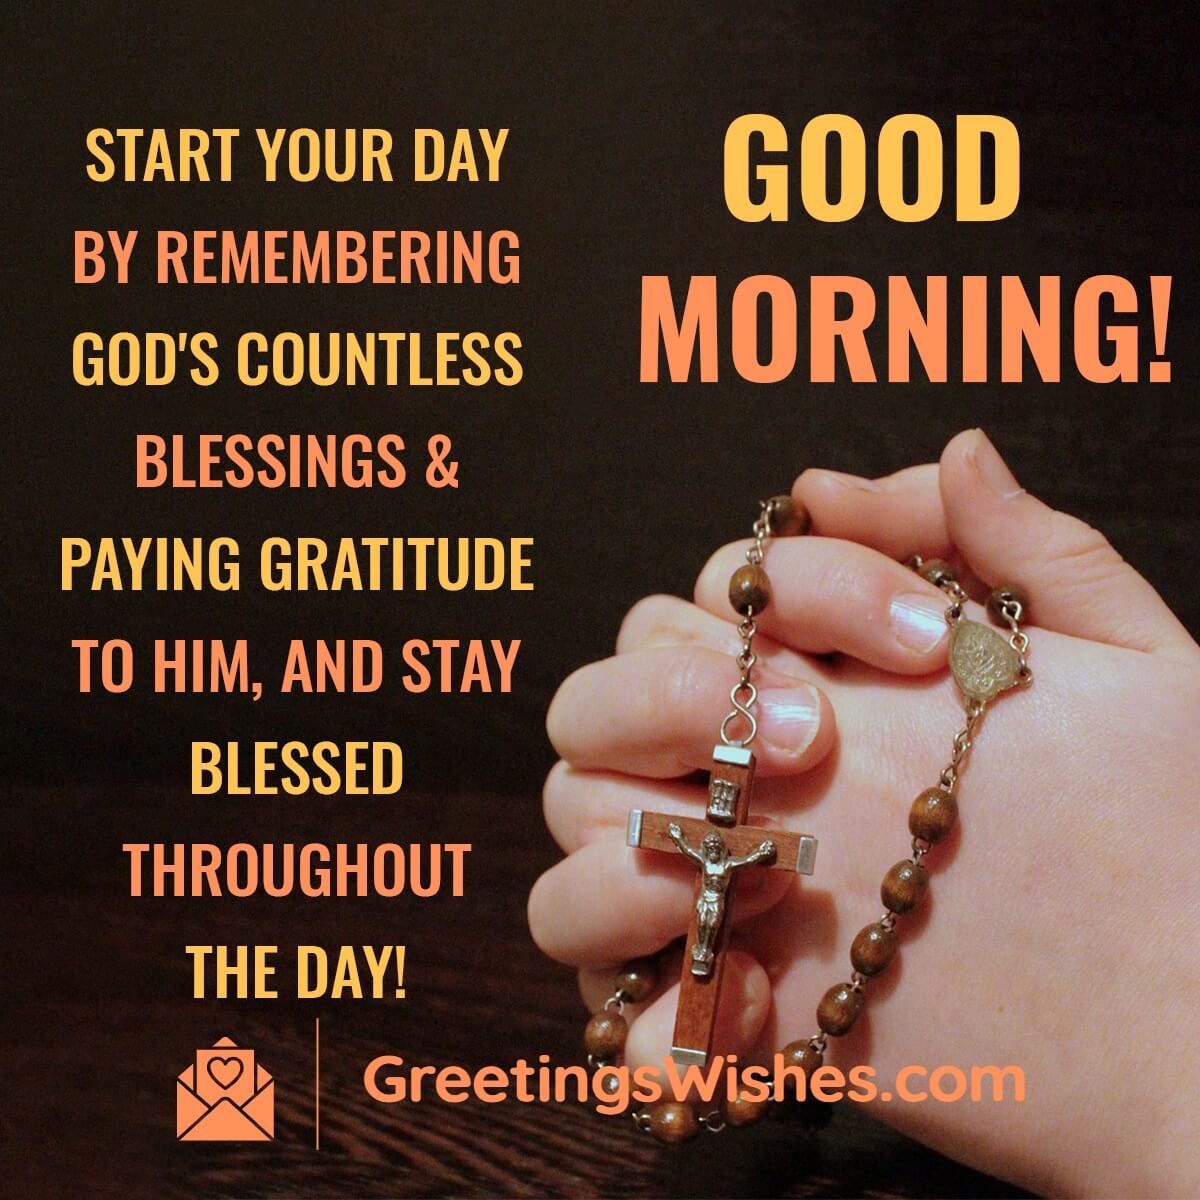 Good Morning Prayer Message